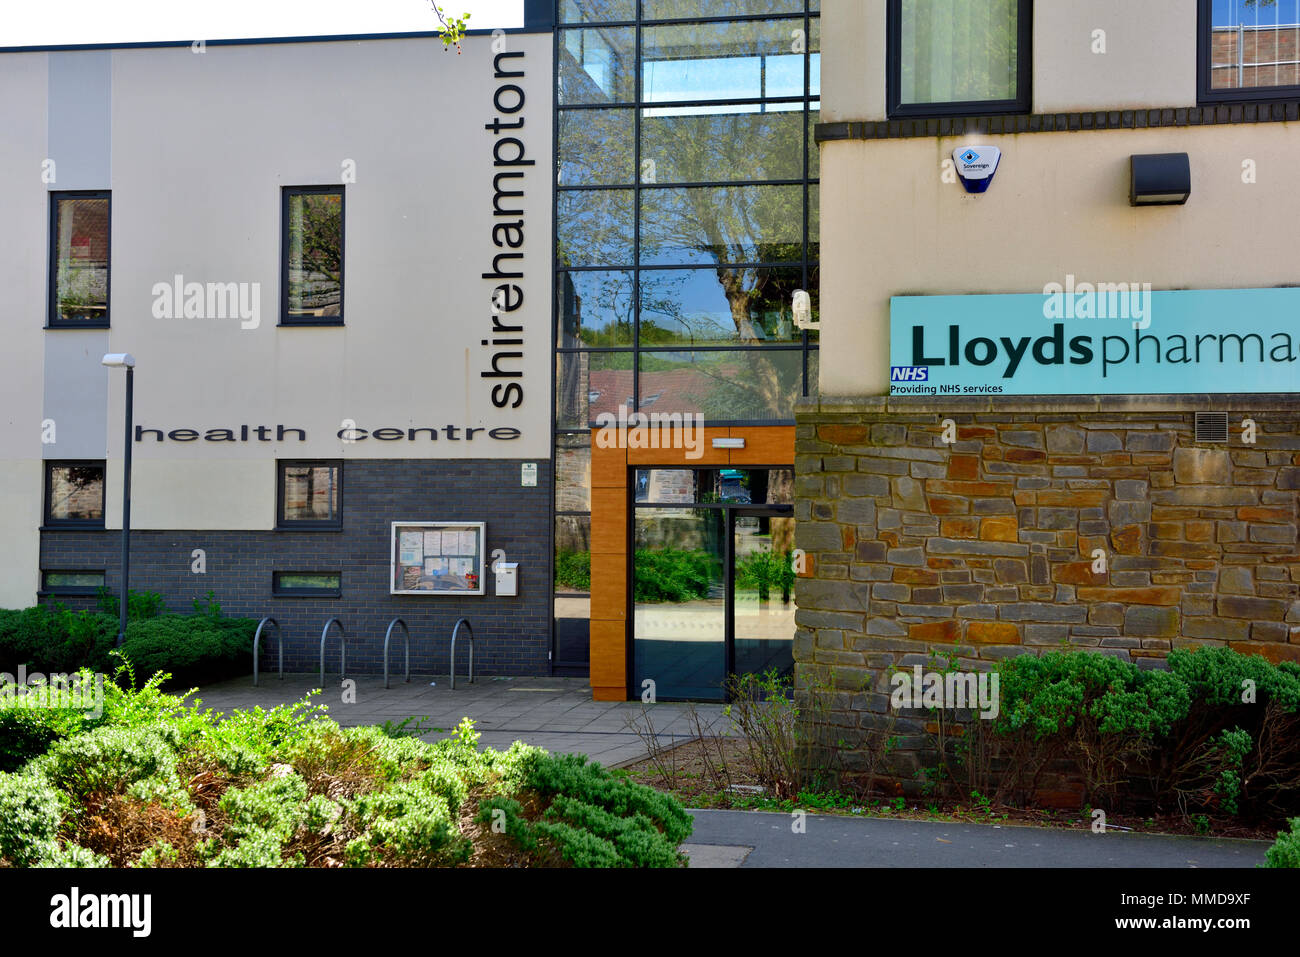 Shirehampton Health Centre and Lloyds pharmacy buildings, Bristol, UK Stock Photo